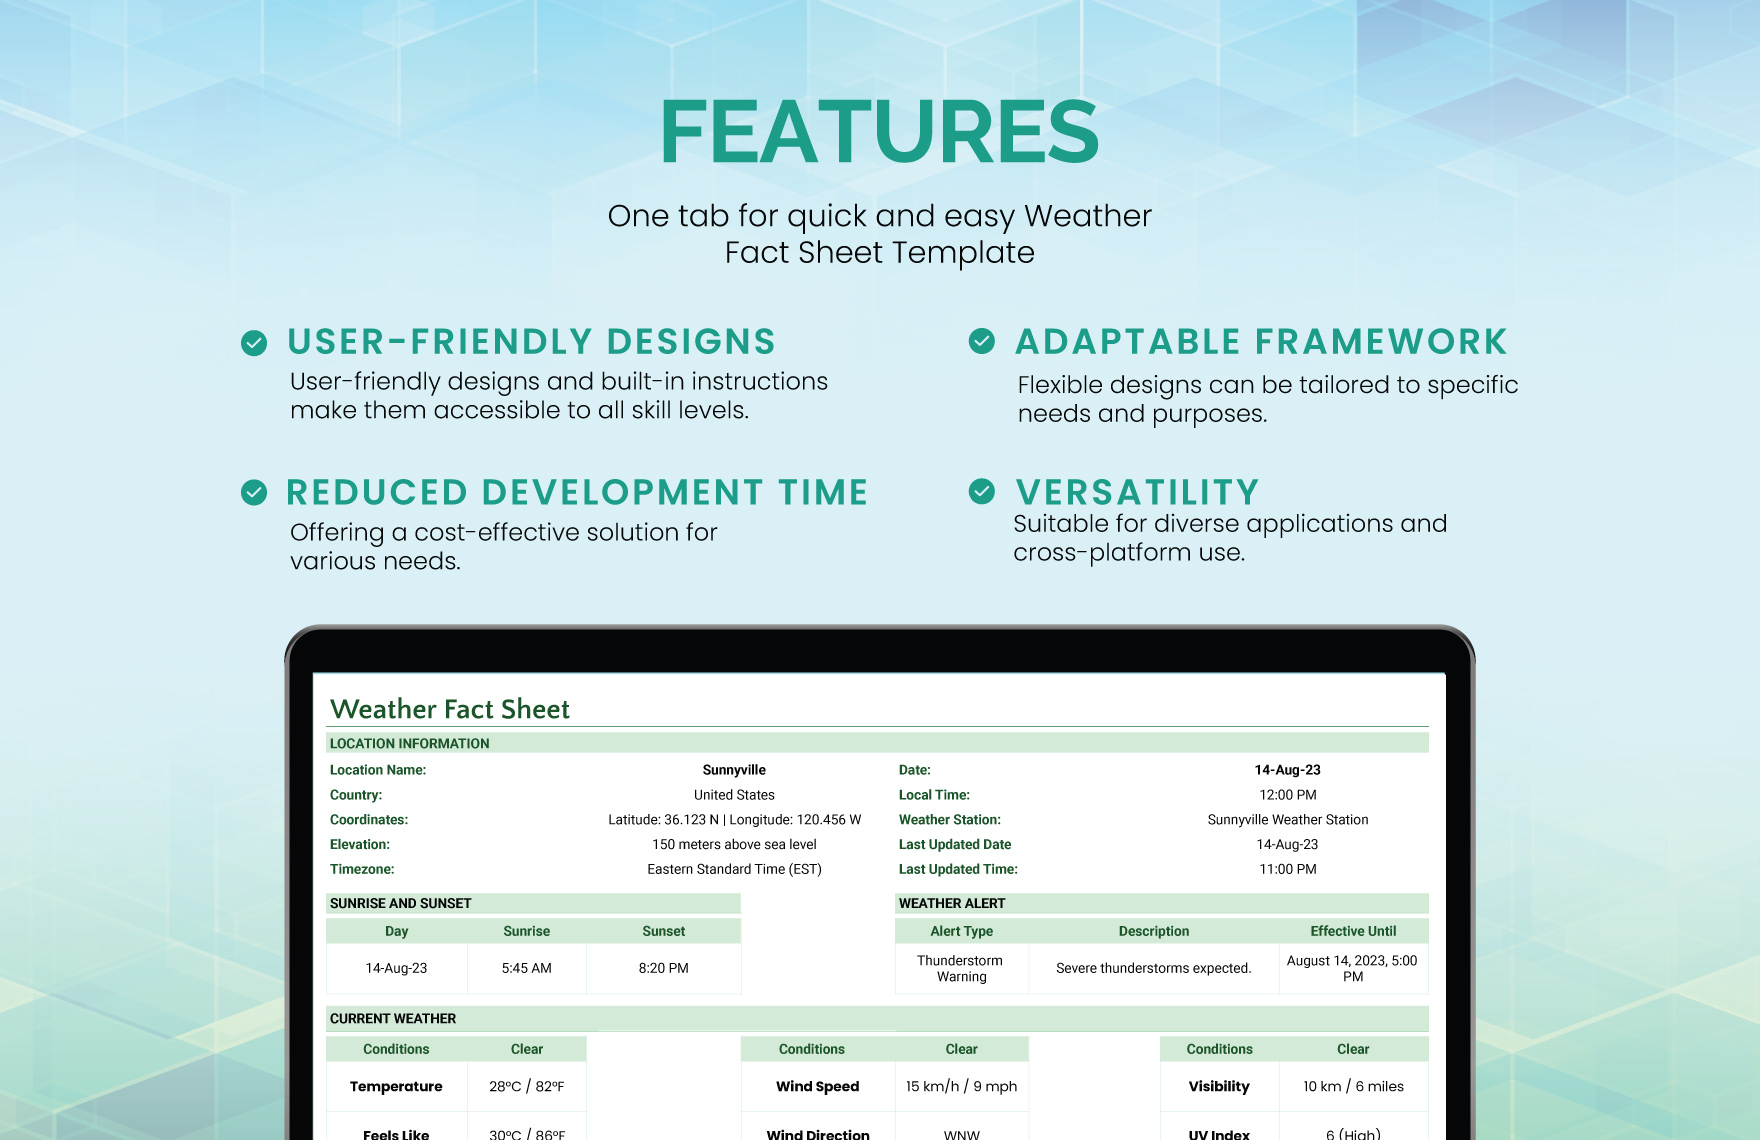 Weather Fact Sheet Template